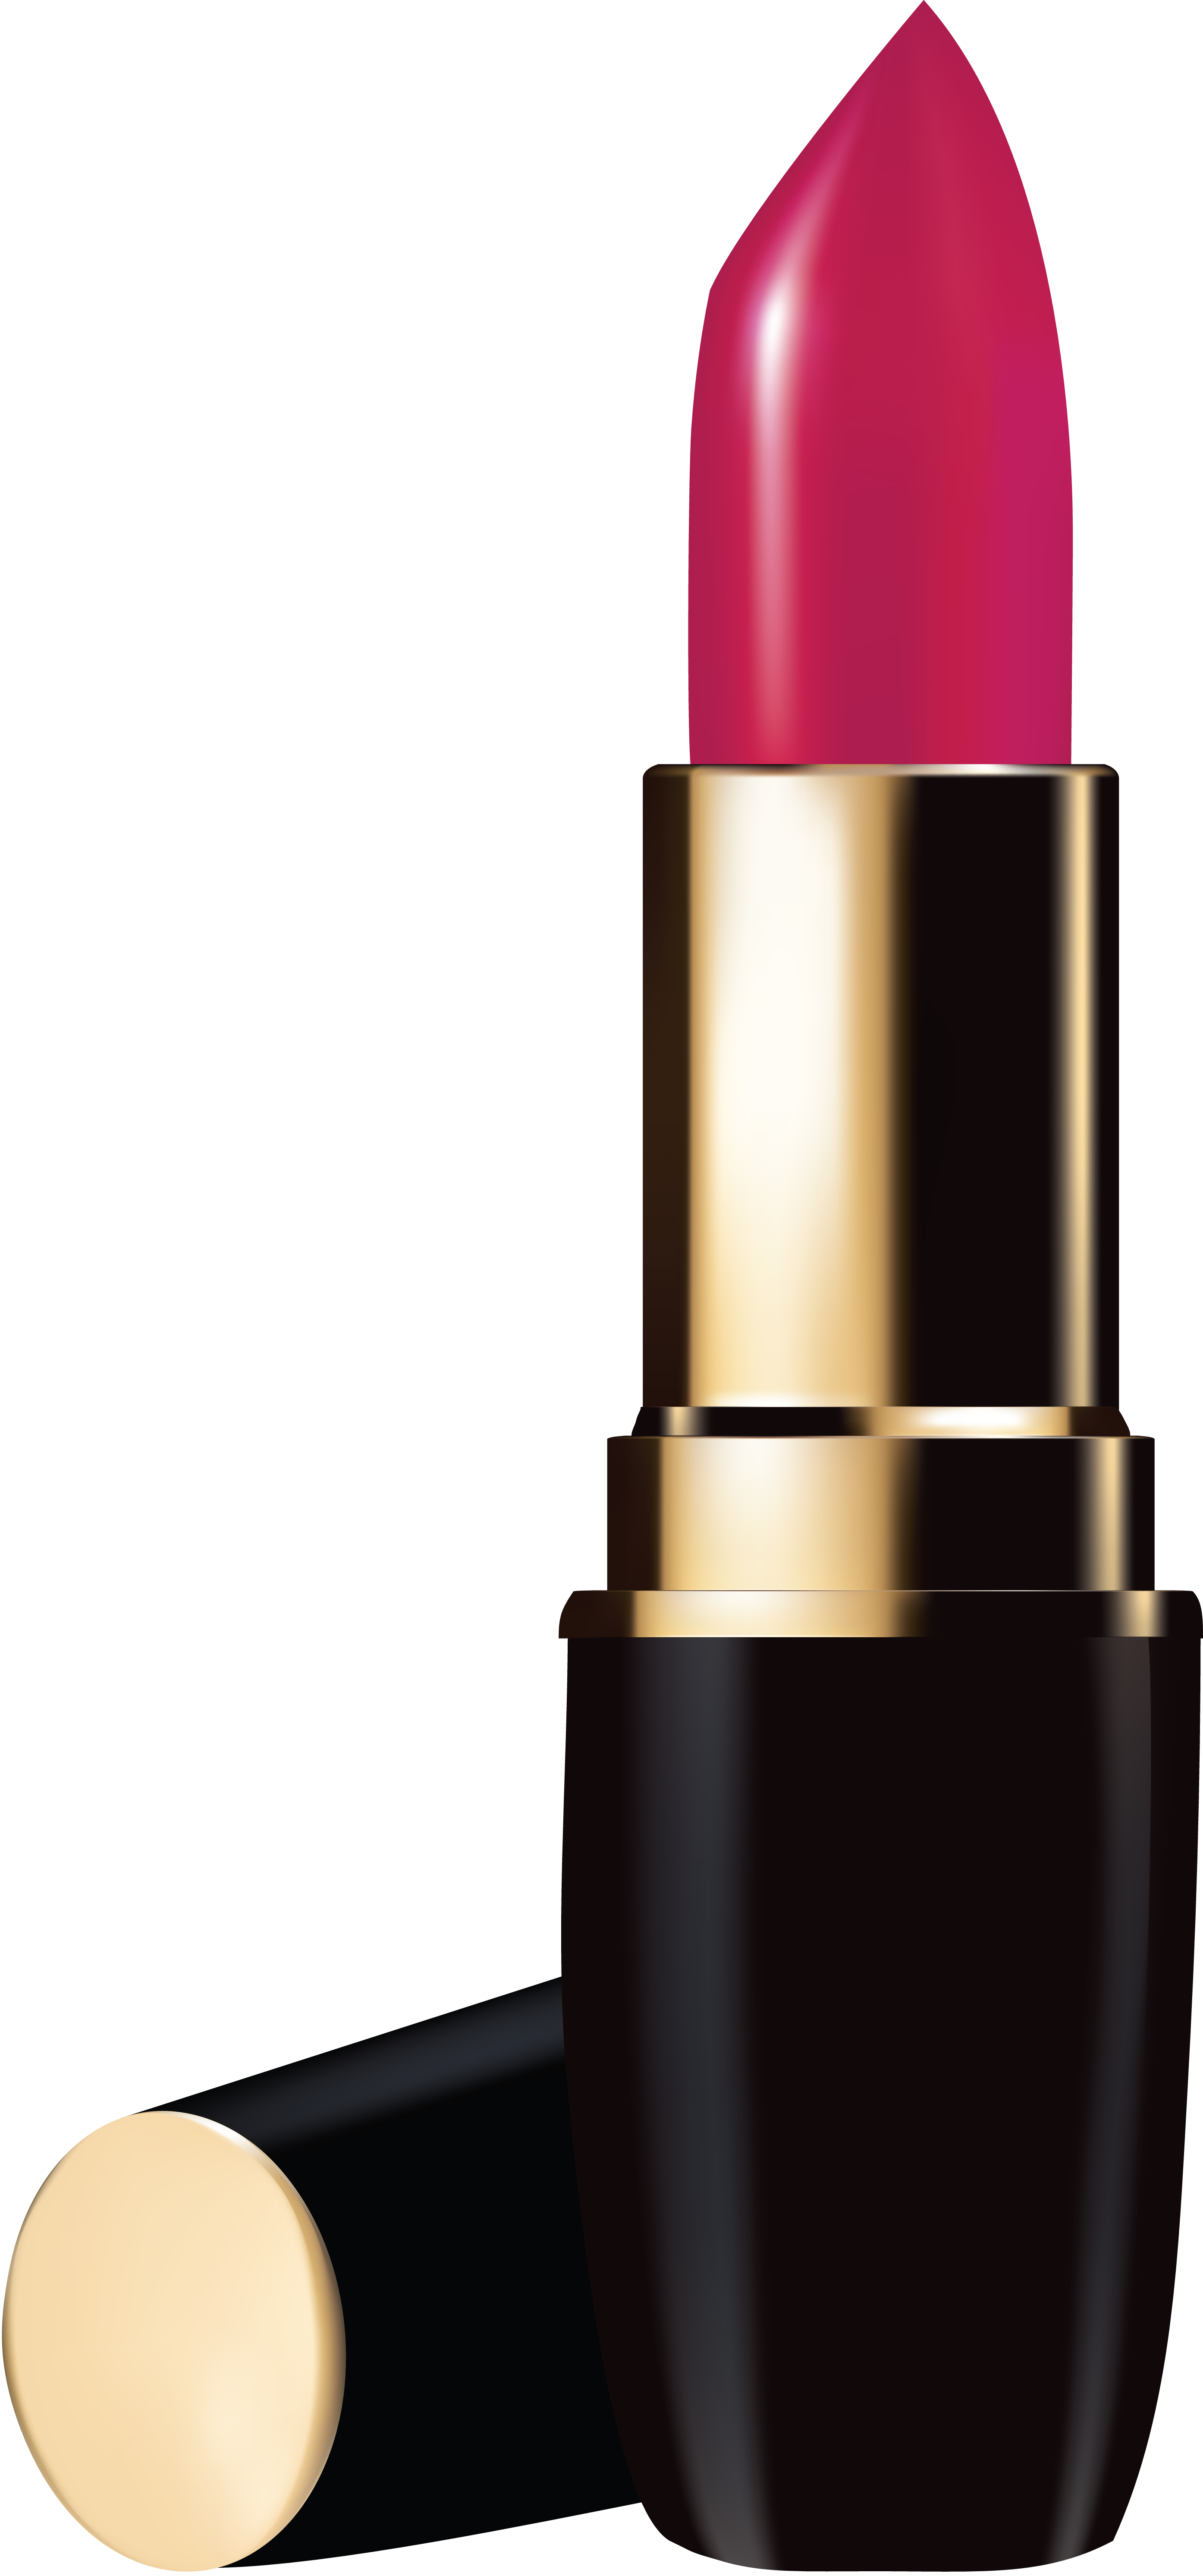 Lipstick Download Transparent PNG Image